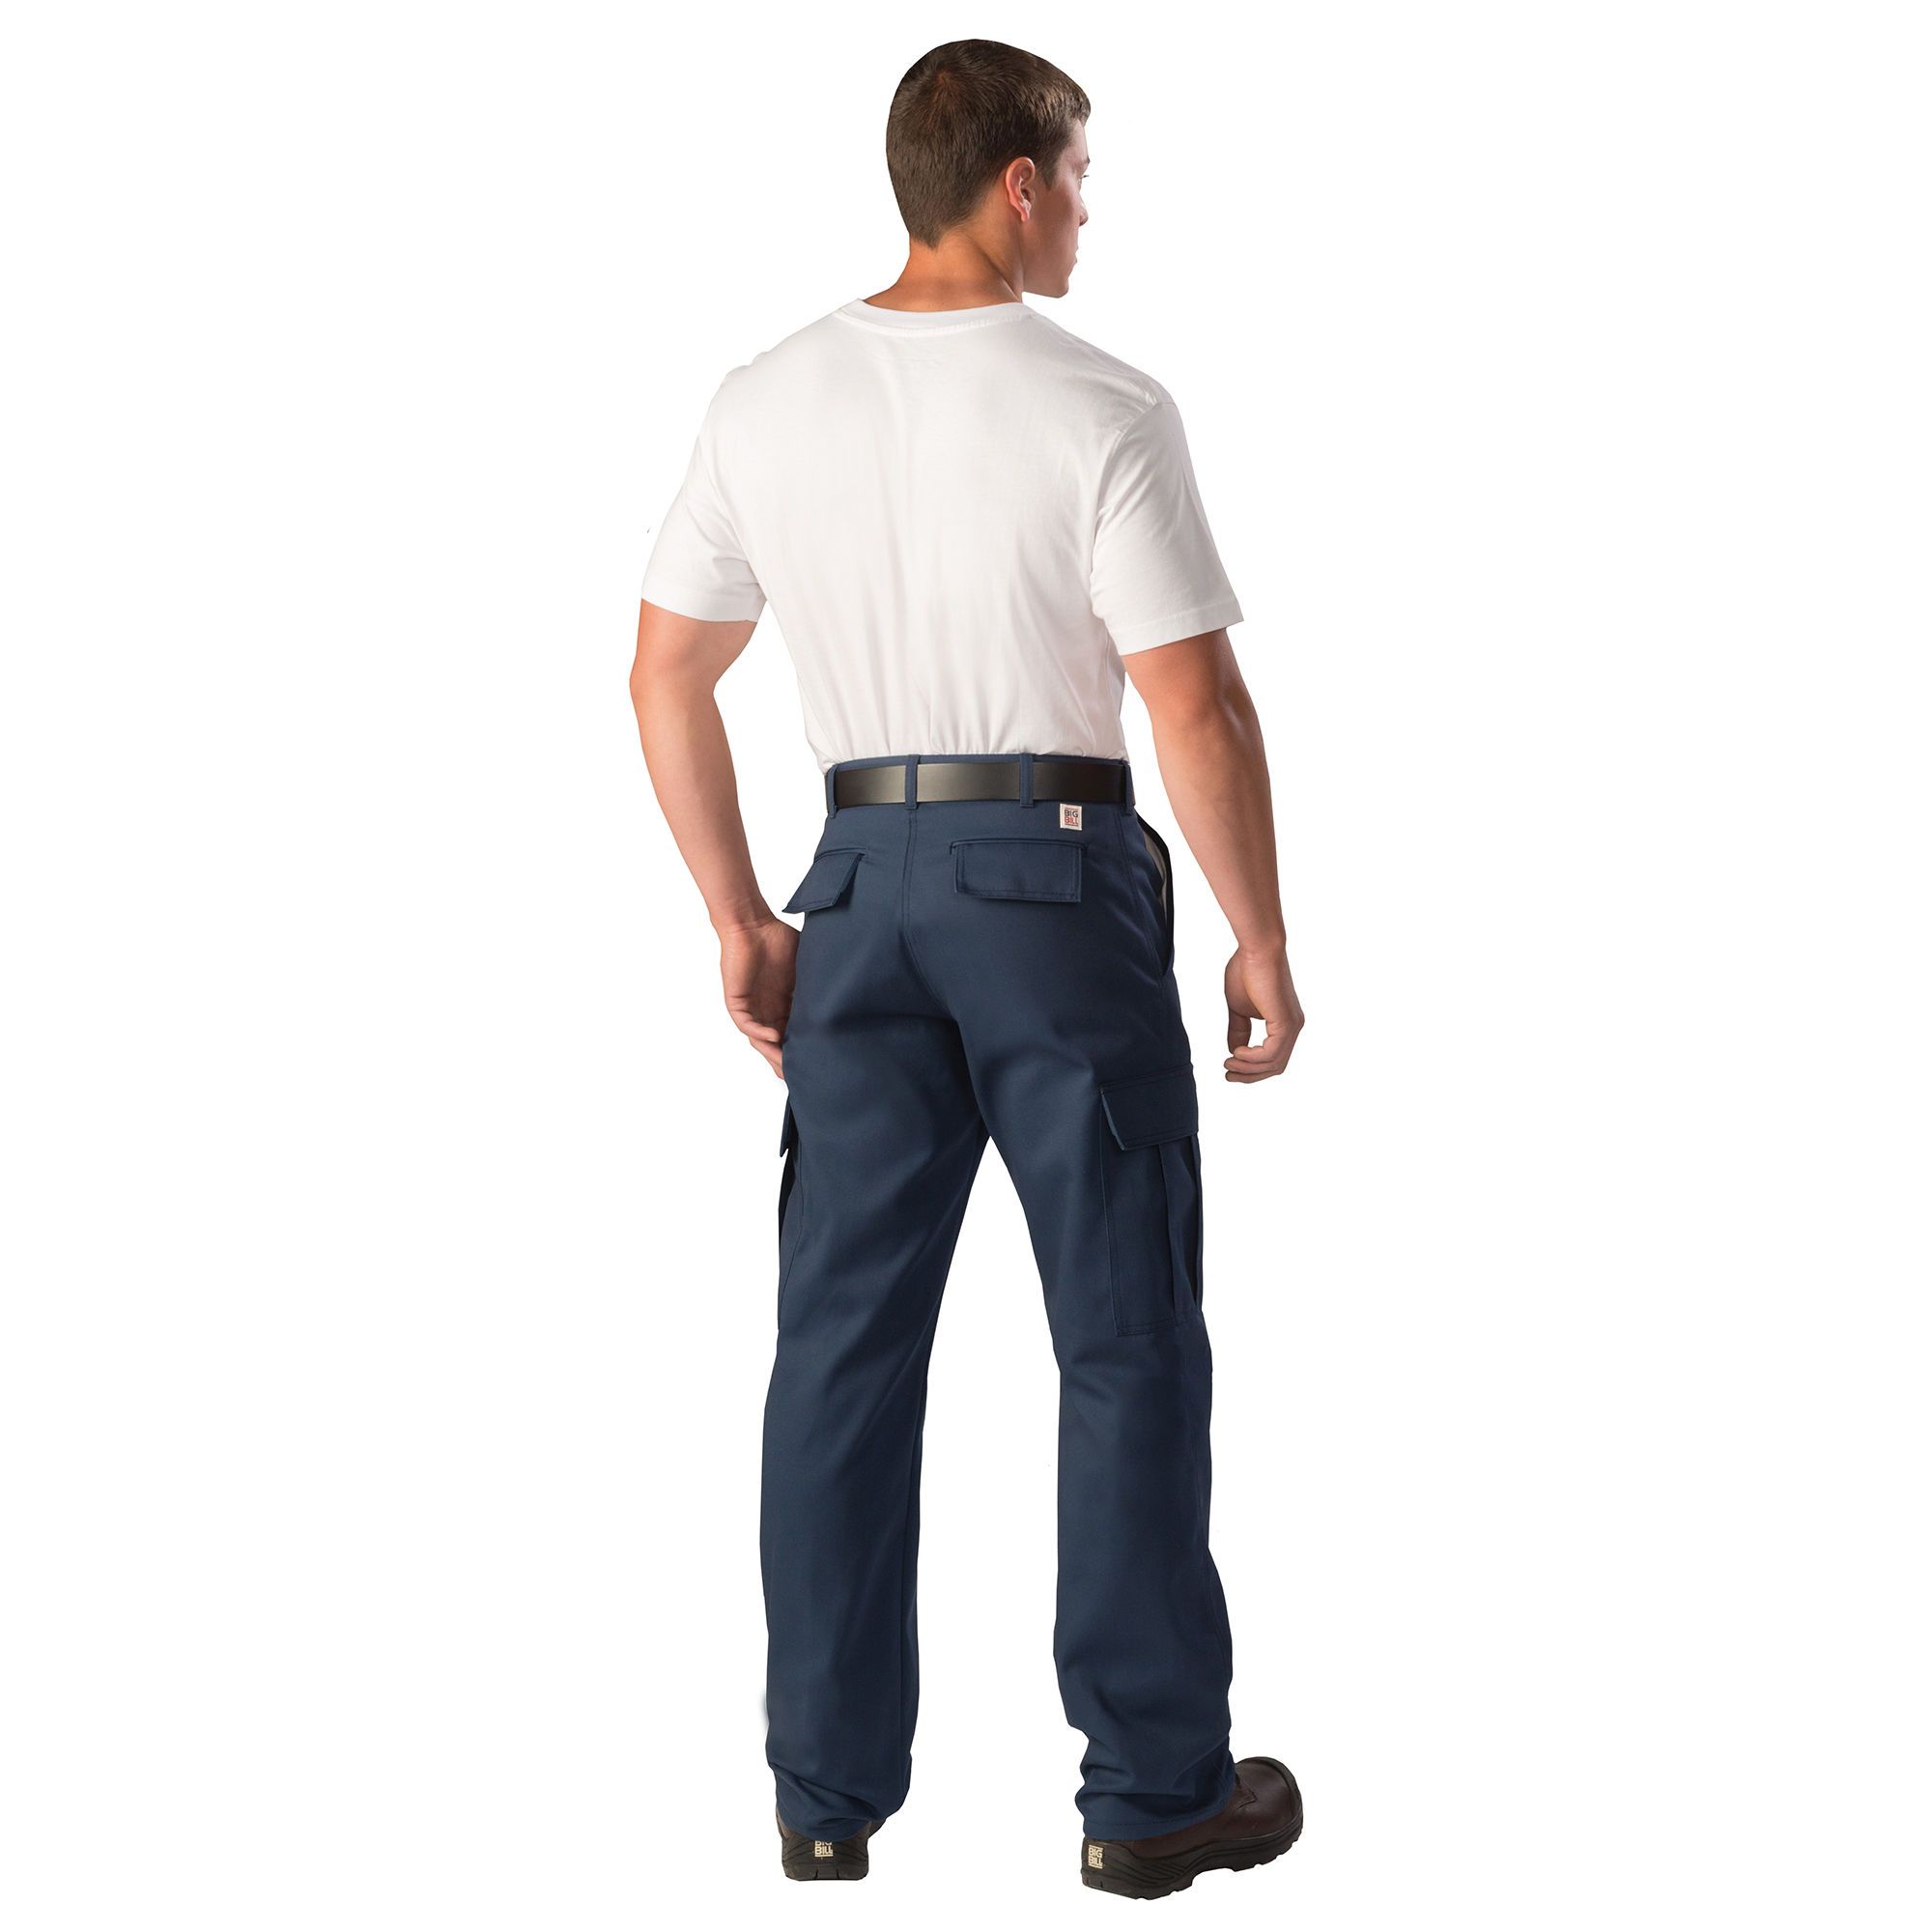 Fleece Lined Pants - Blue - Size 34/32